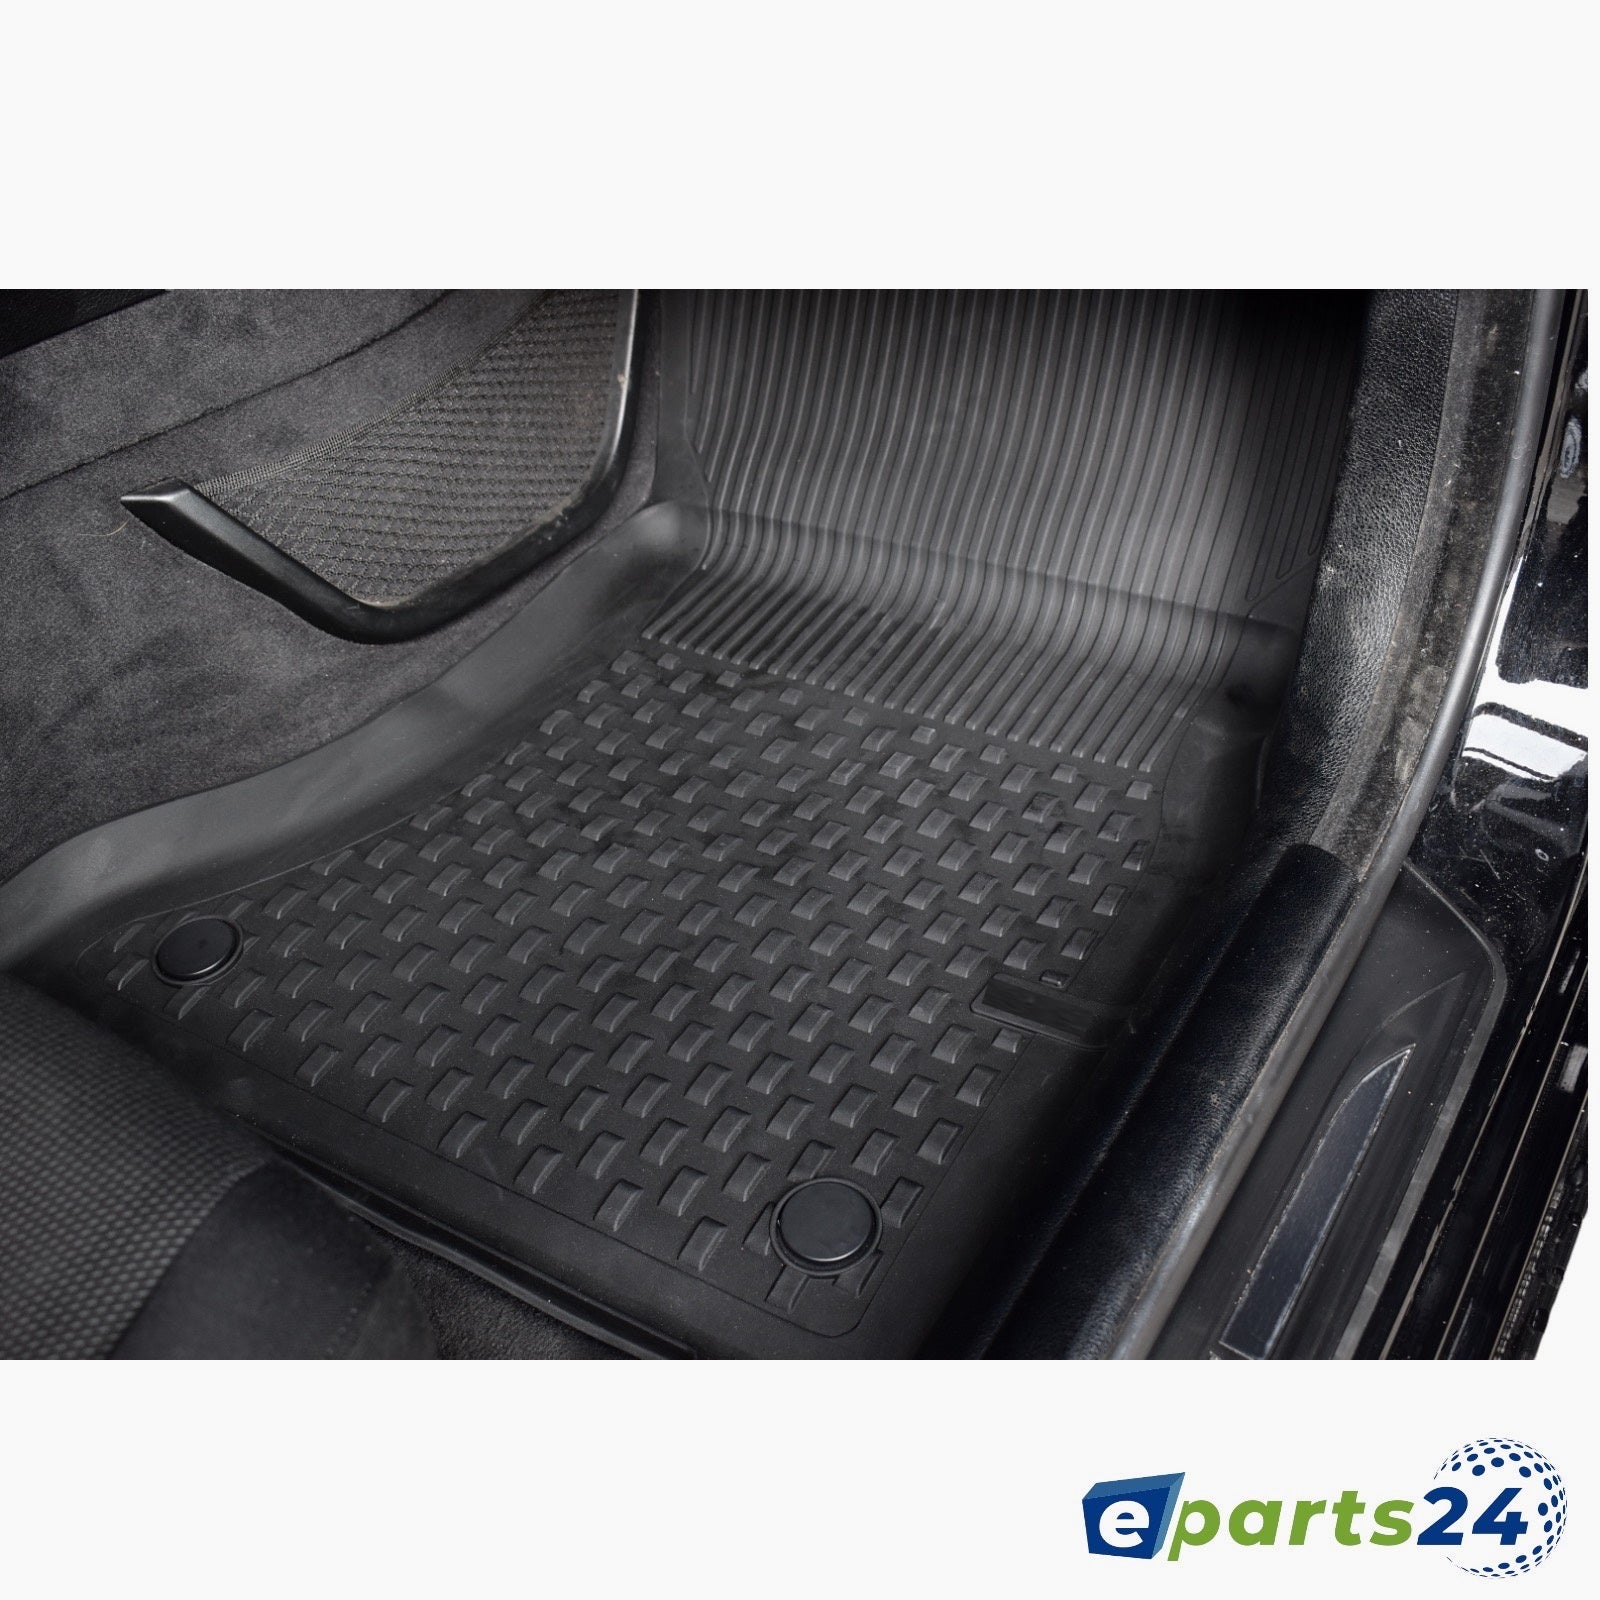 E-Parts24 Automatten F10 Premium für Limo TPE Touring 5er – BMW Fußmatten 5tlg F11